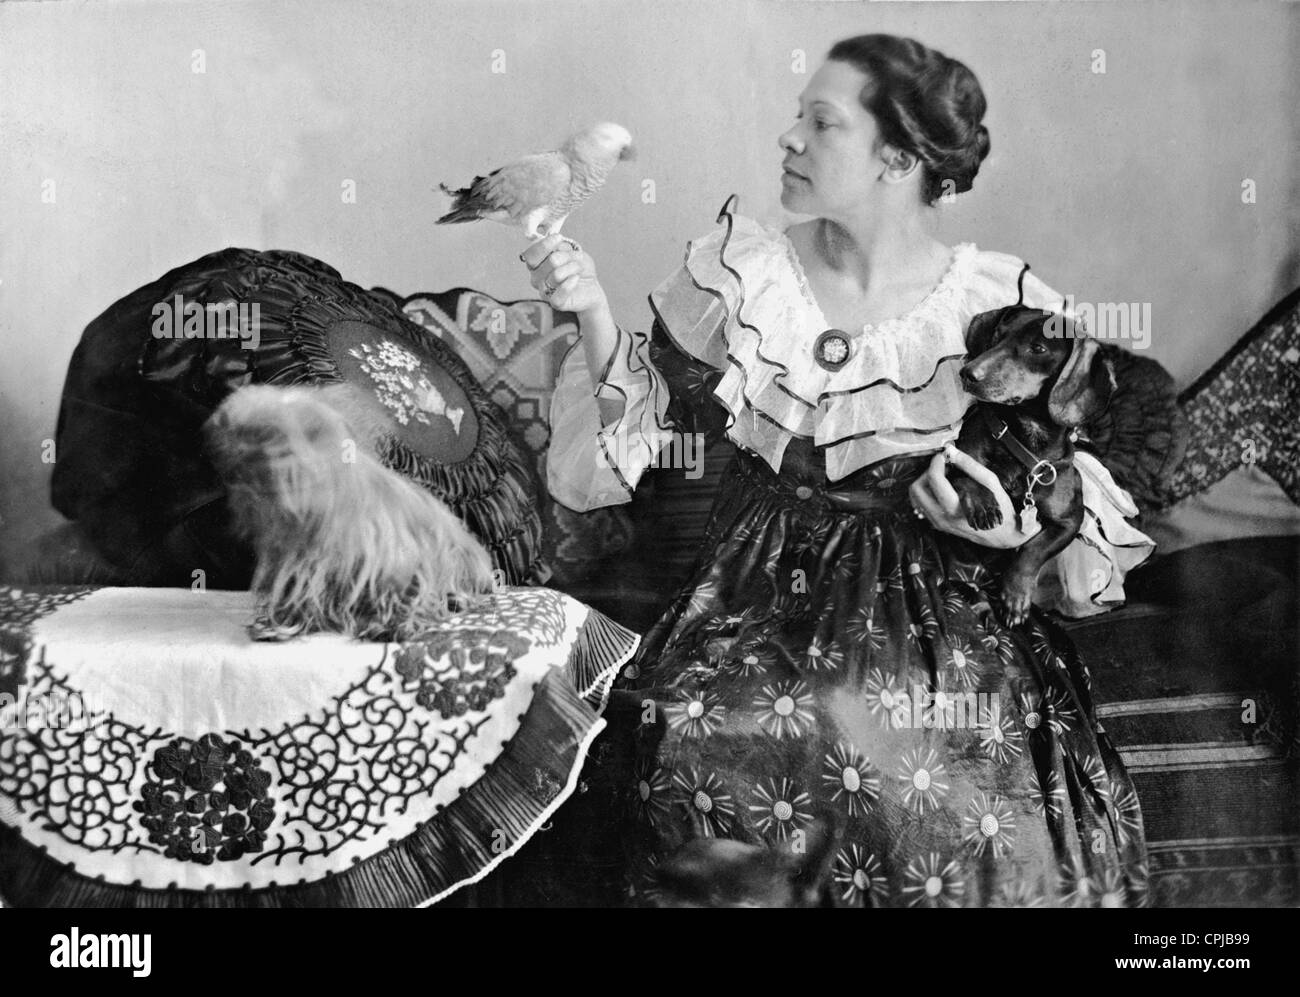 Tilla Durieux, 1916 Stock Photo - Alamy